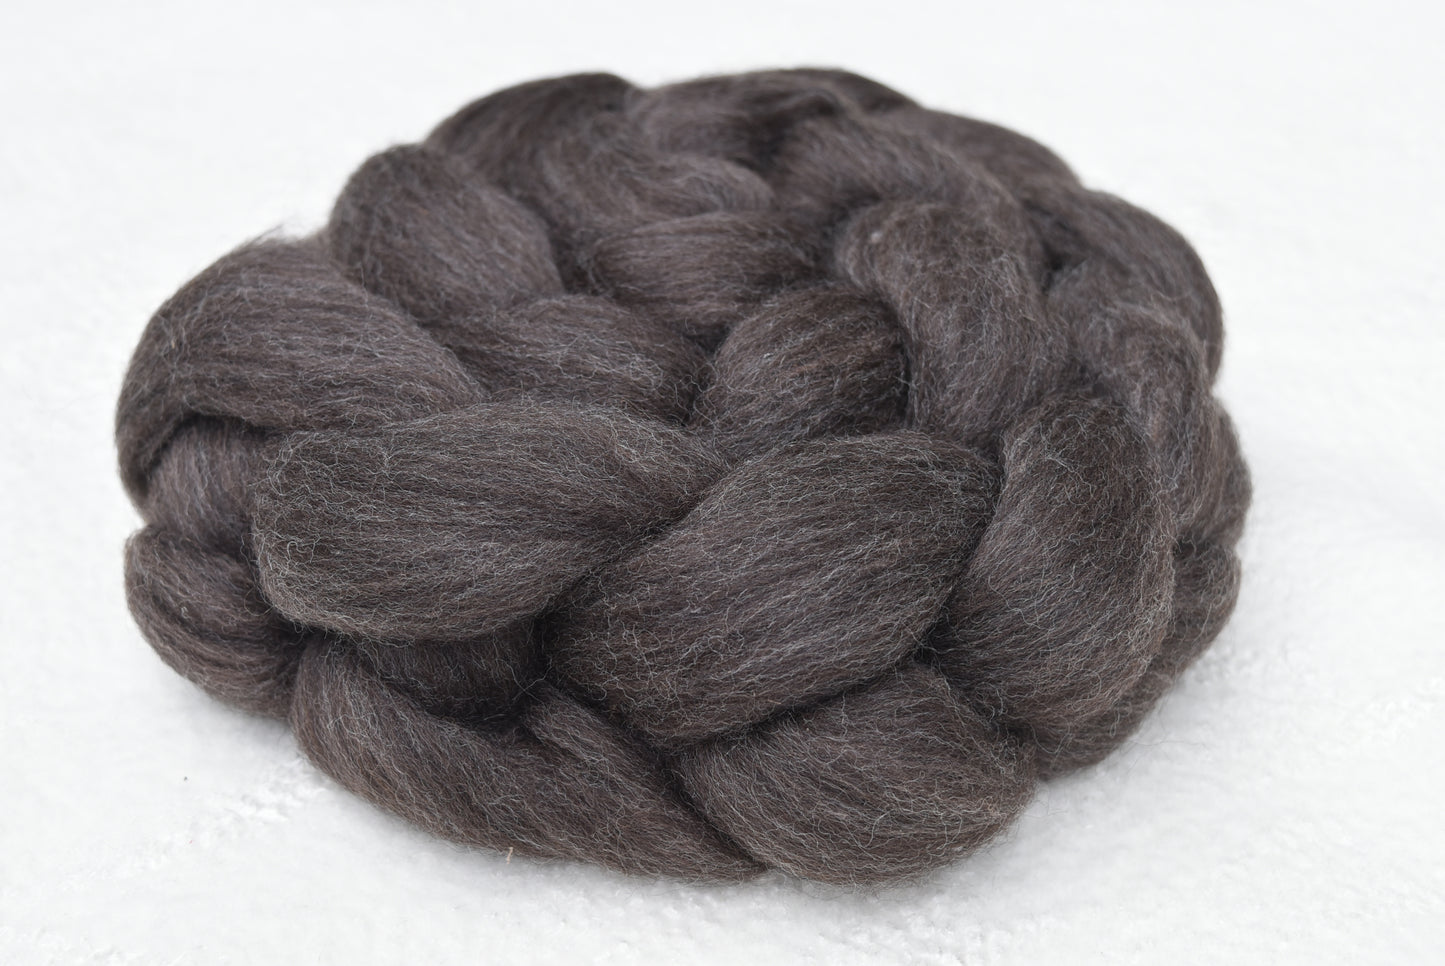 Chocolate Merino Corriedale and Black Alpaca Wool Top| Undyed Wool Roving Top | Sally Ridgway | Shop Wool, Felt and Fibre Online